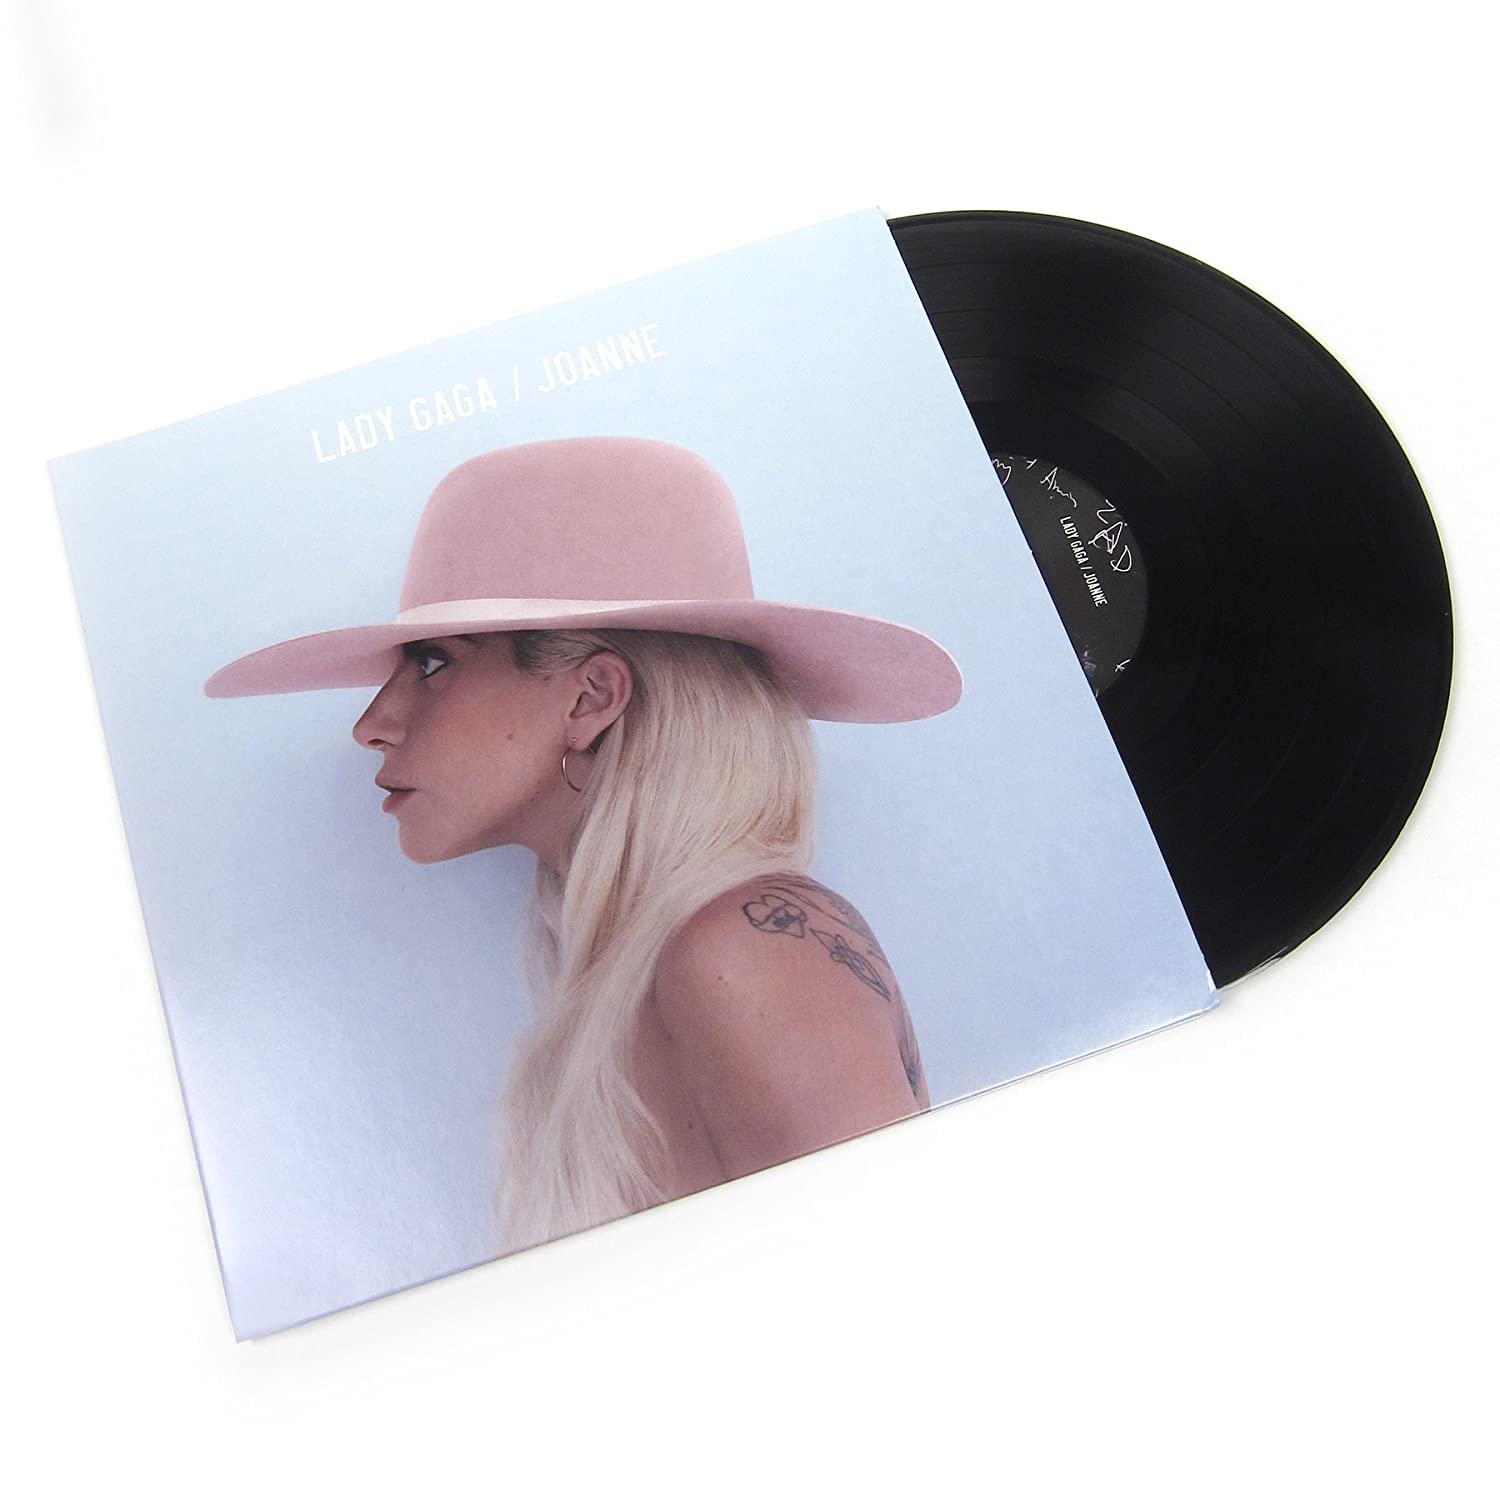 Lady Gaga: Joanne (Deluxe Edition) 2 lps - Black Vinyl Records Spain